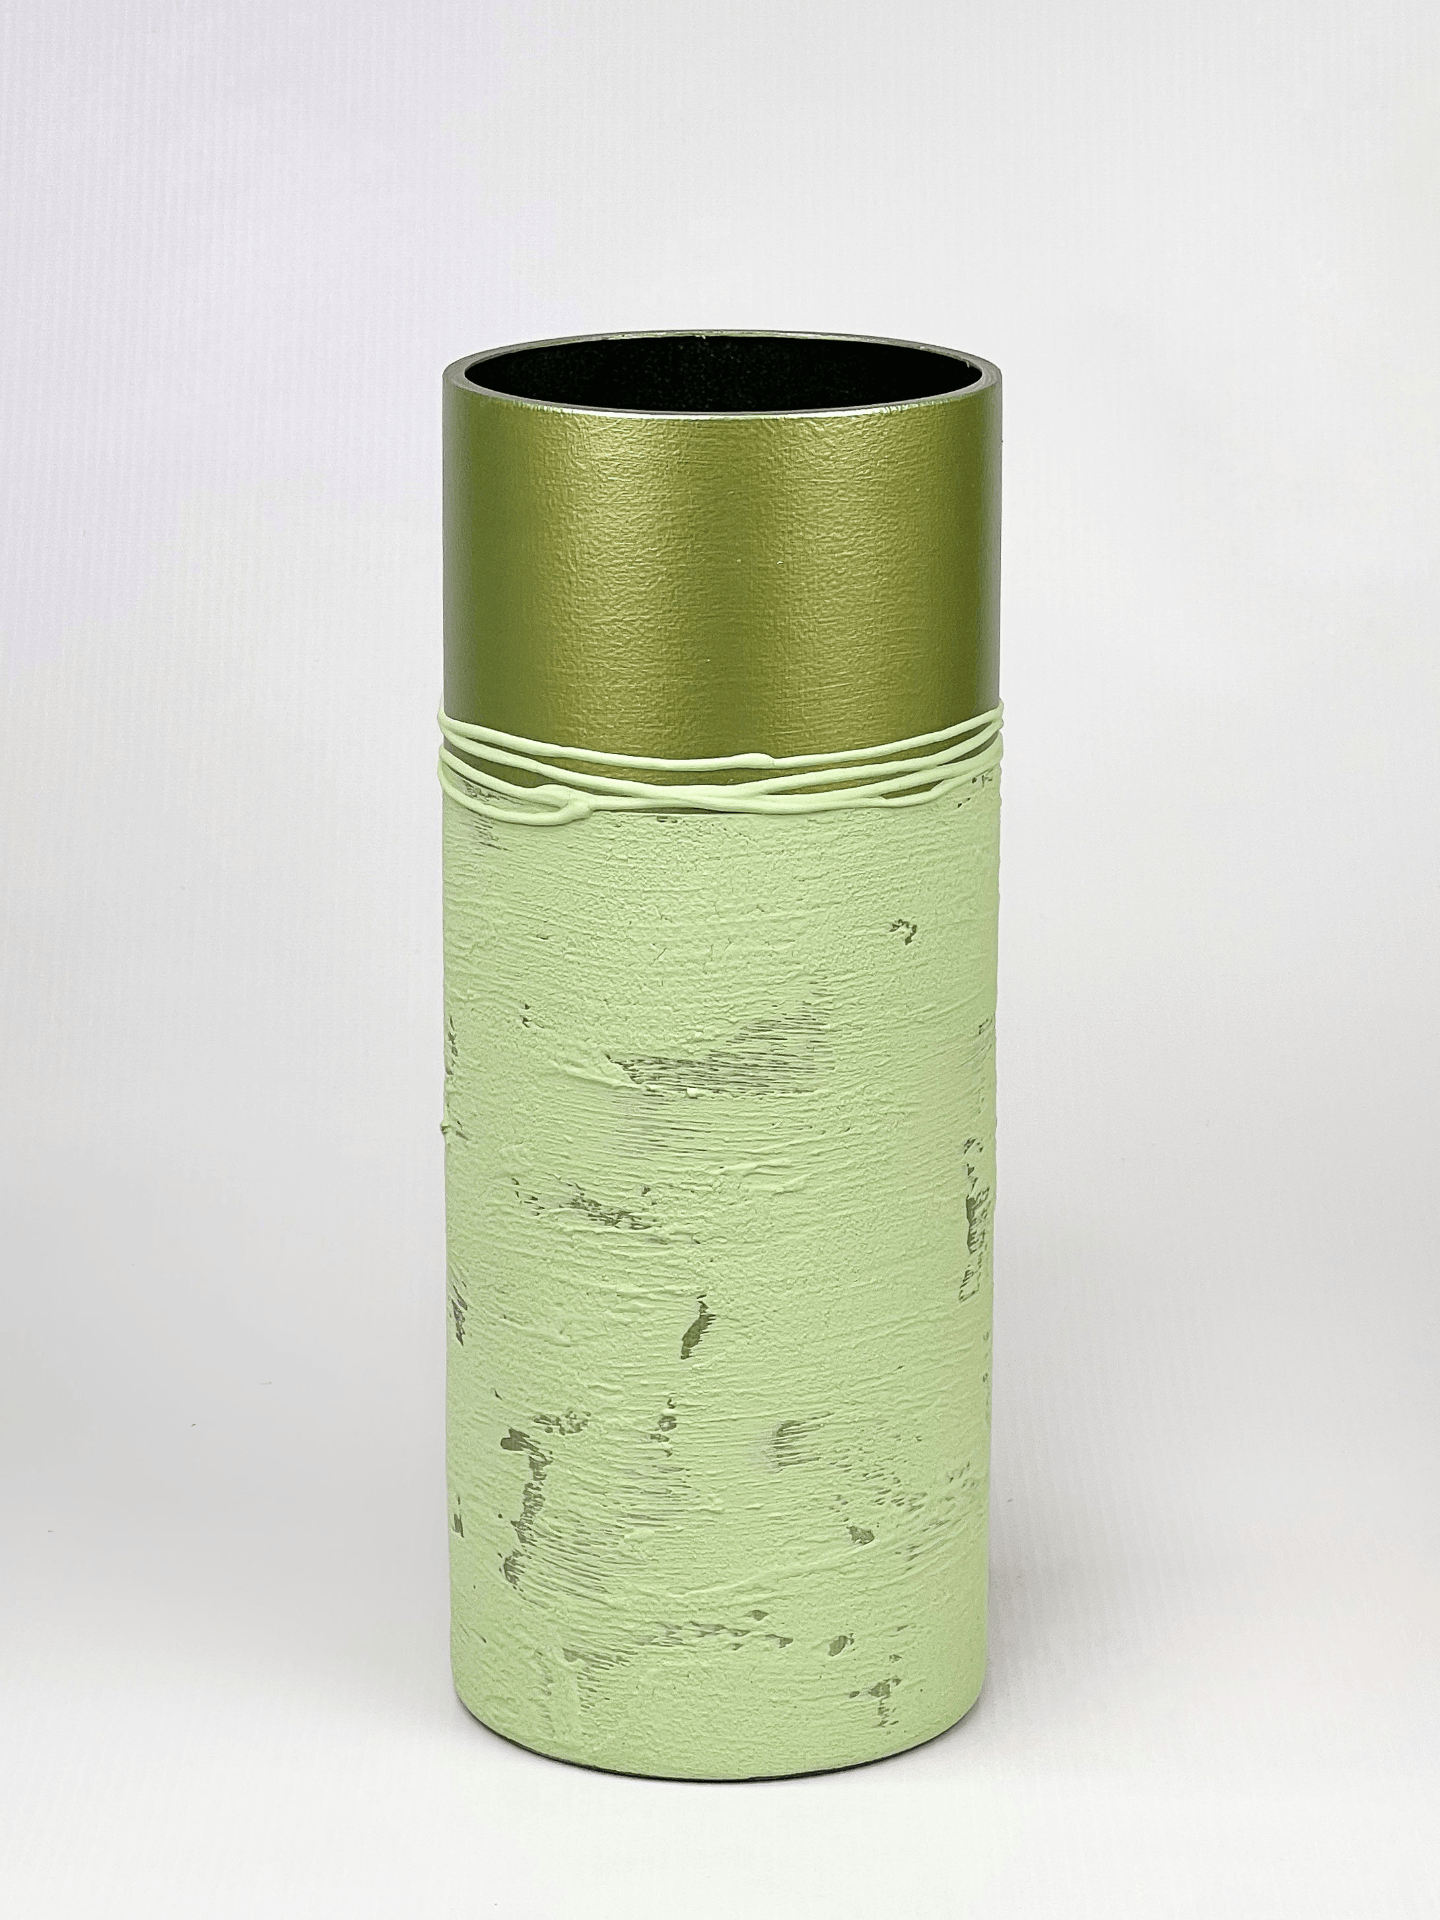 Art decorative glass vase 7017/300/sh182.2  